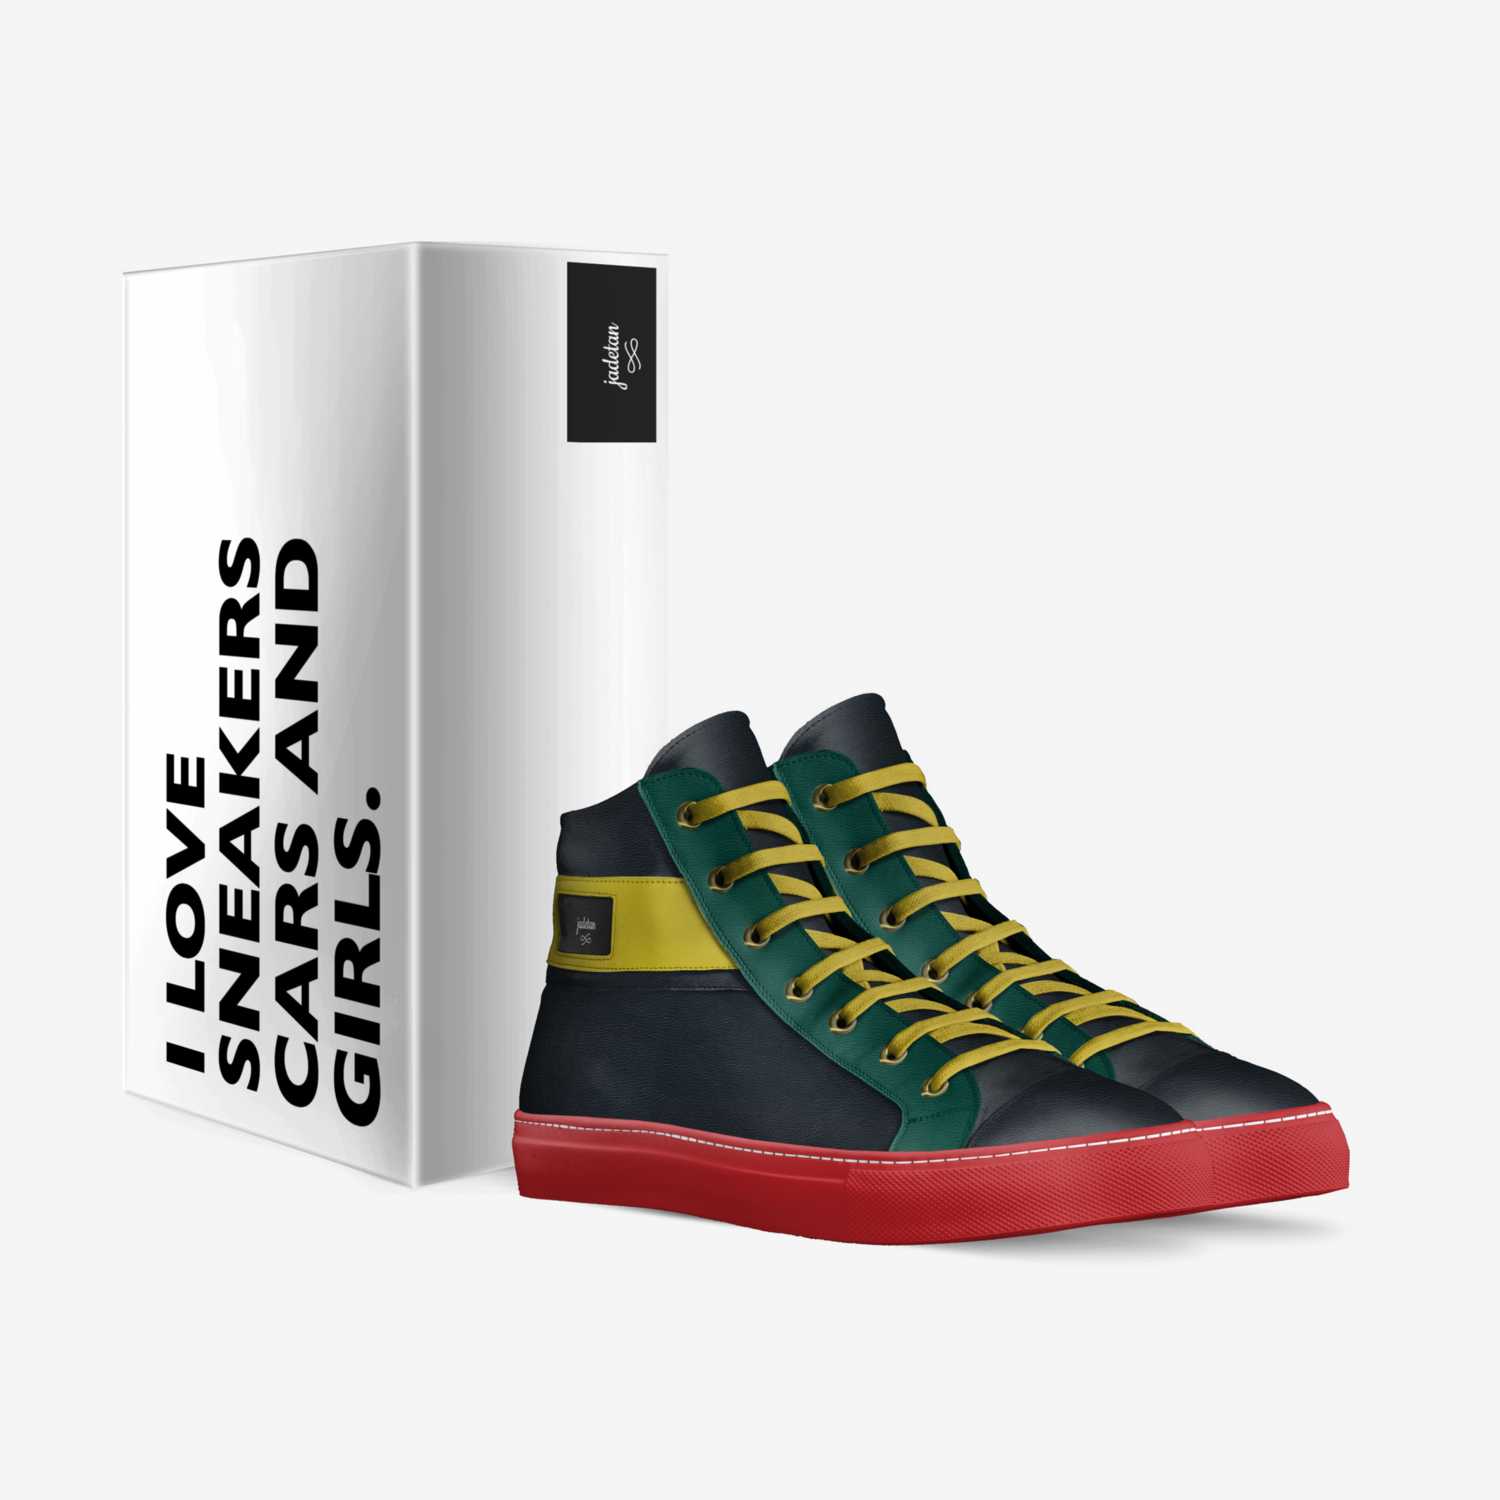 jadetan custom made in Italy shoes by Samuel Olanrewaju | Box view